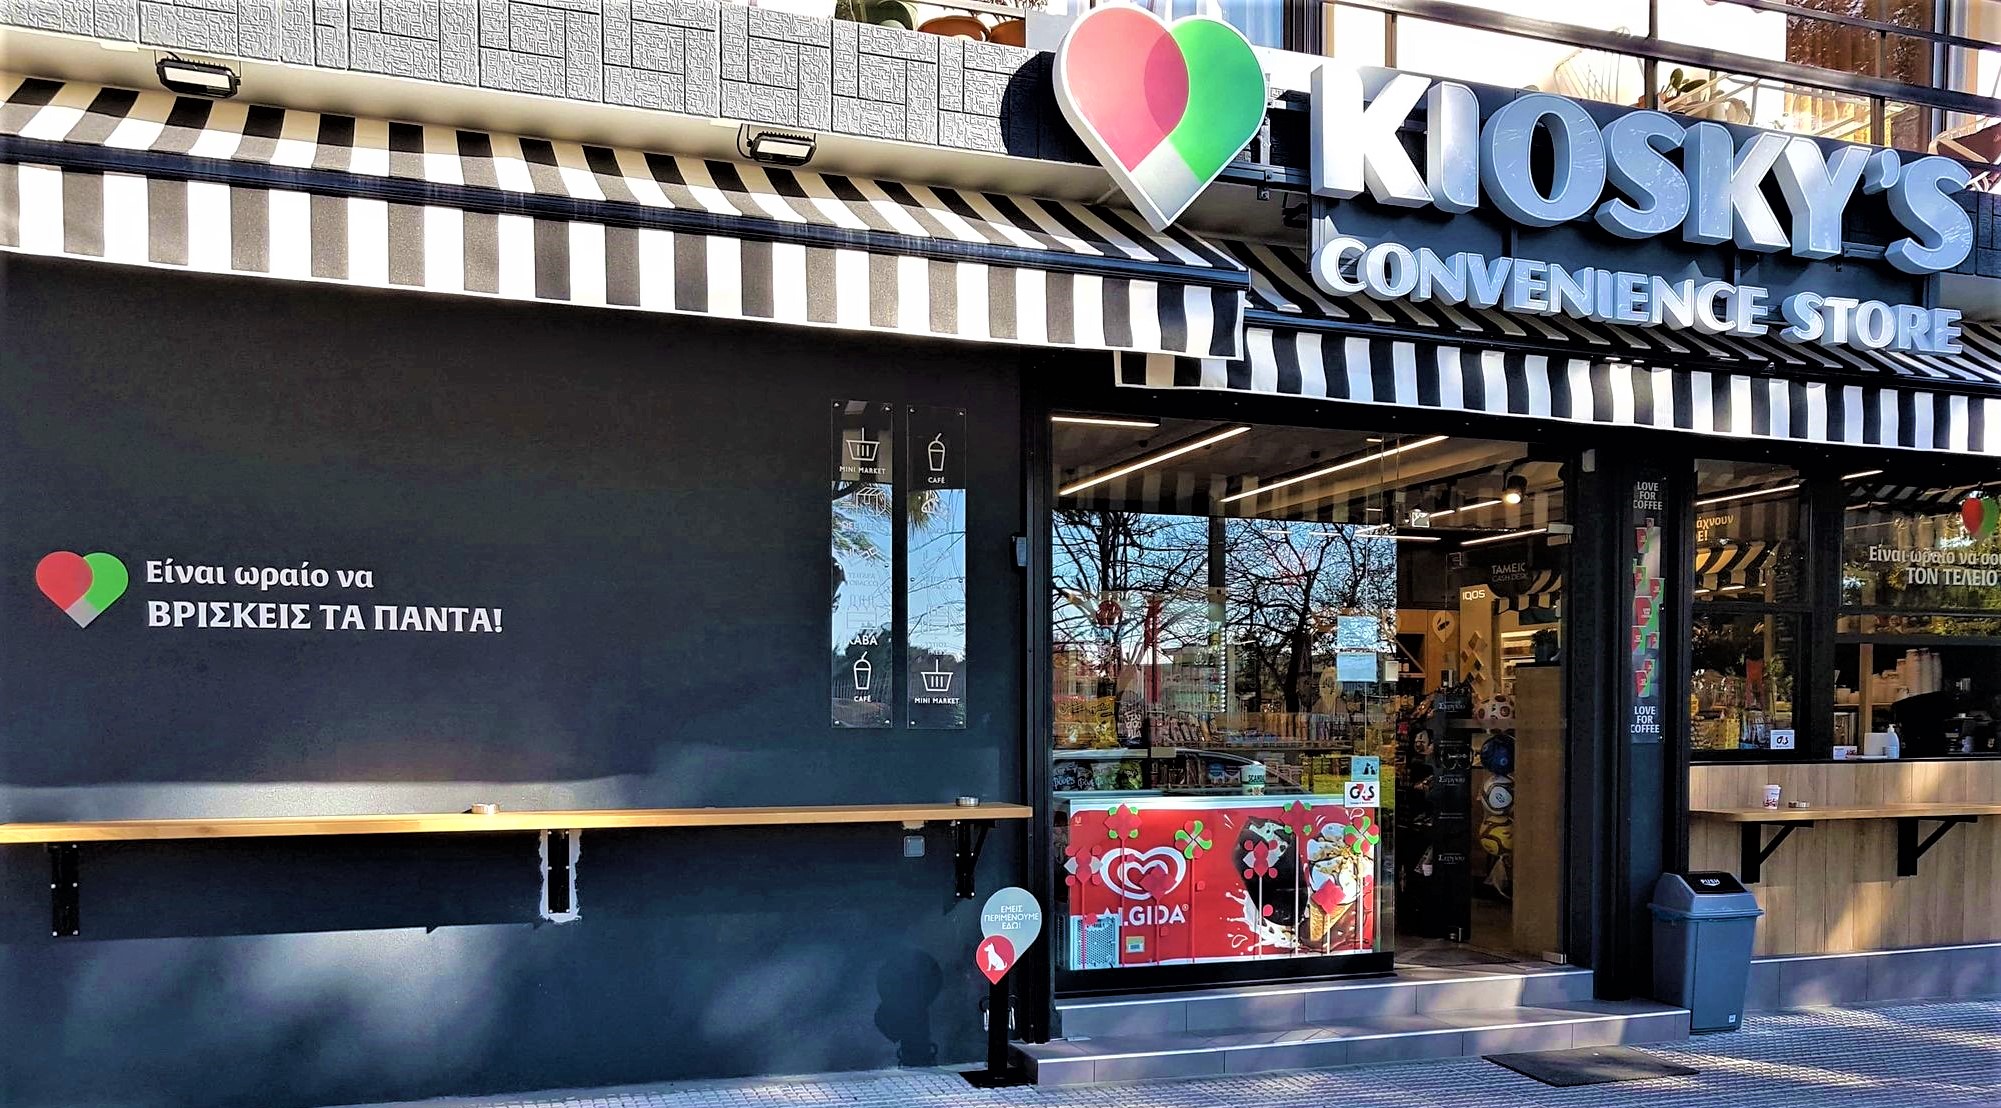 Kiosky’s:  Στόχος τα 100 καταστήματα μέσα στο 2021